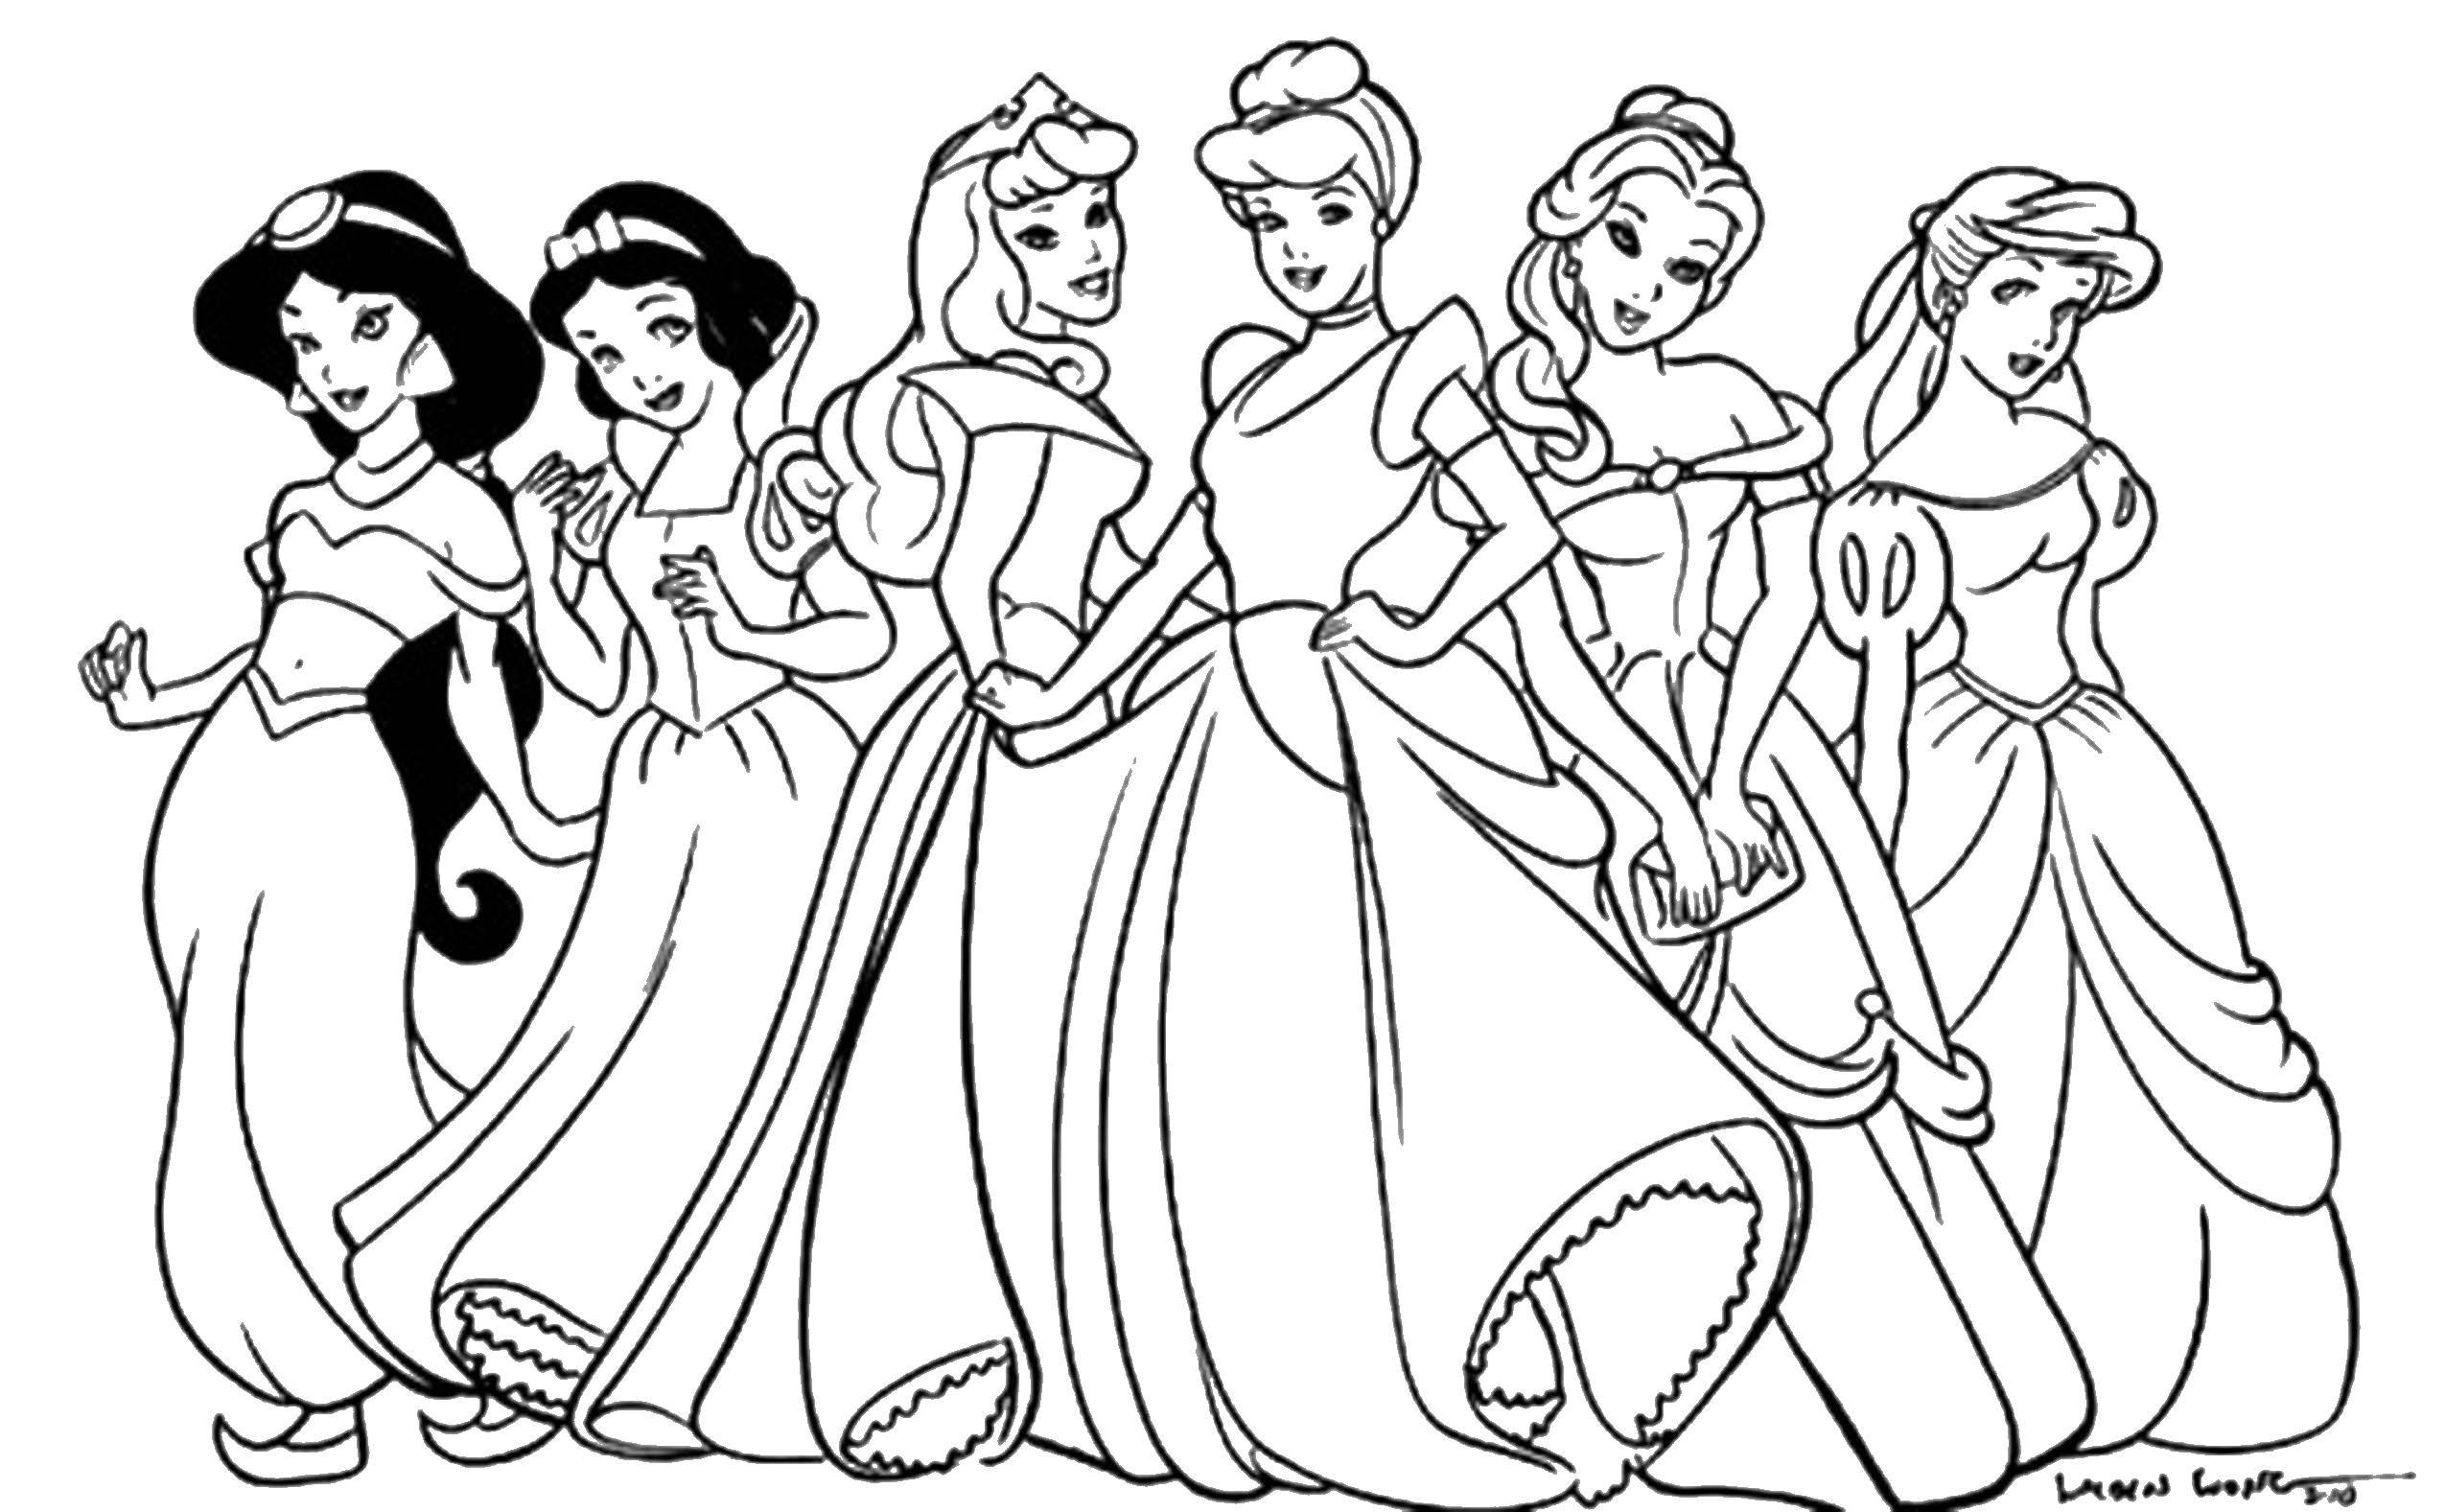 Coloring Shallow Princess types of disney. Category Disney coloring pages. Tags:  Disney, Princess.